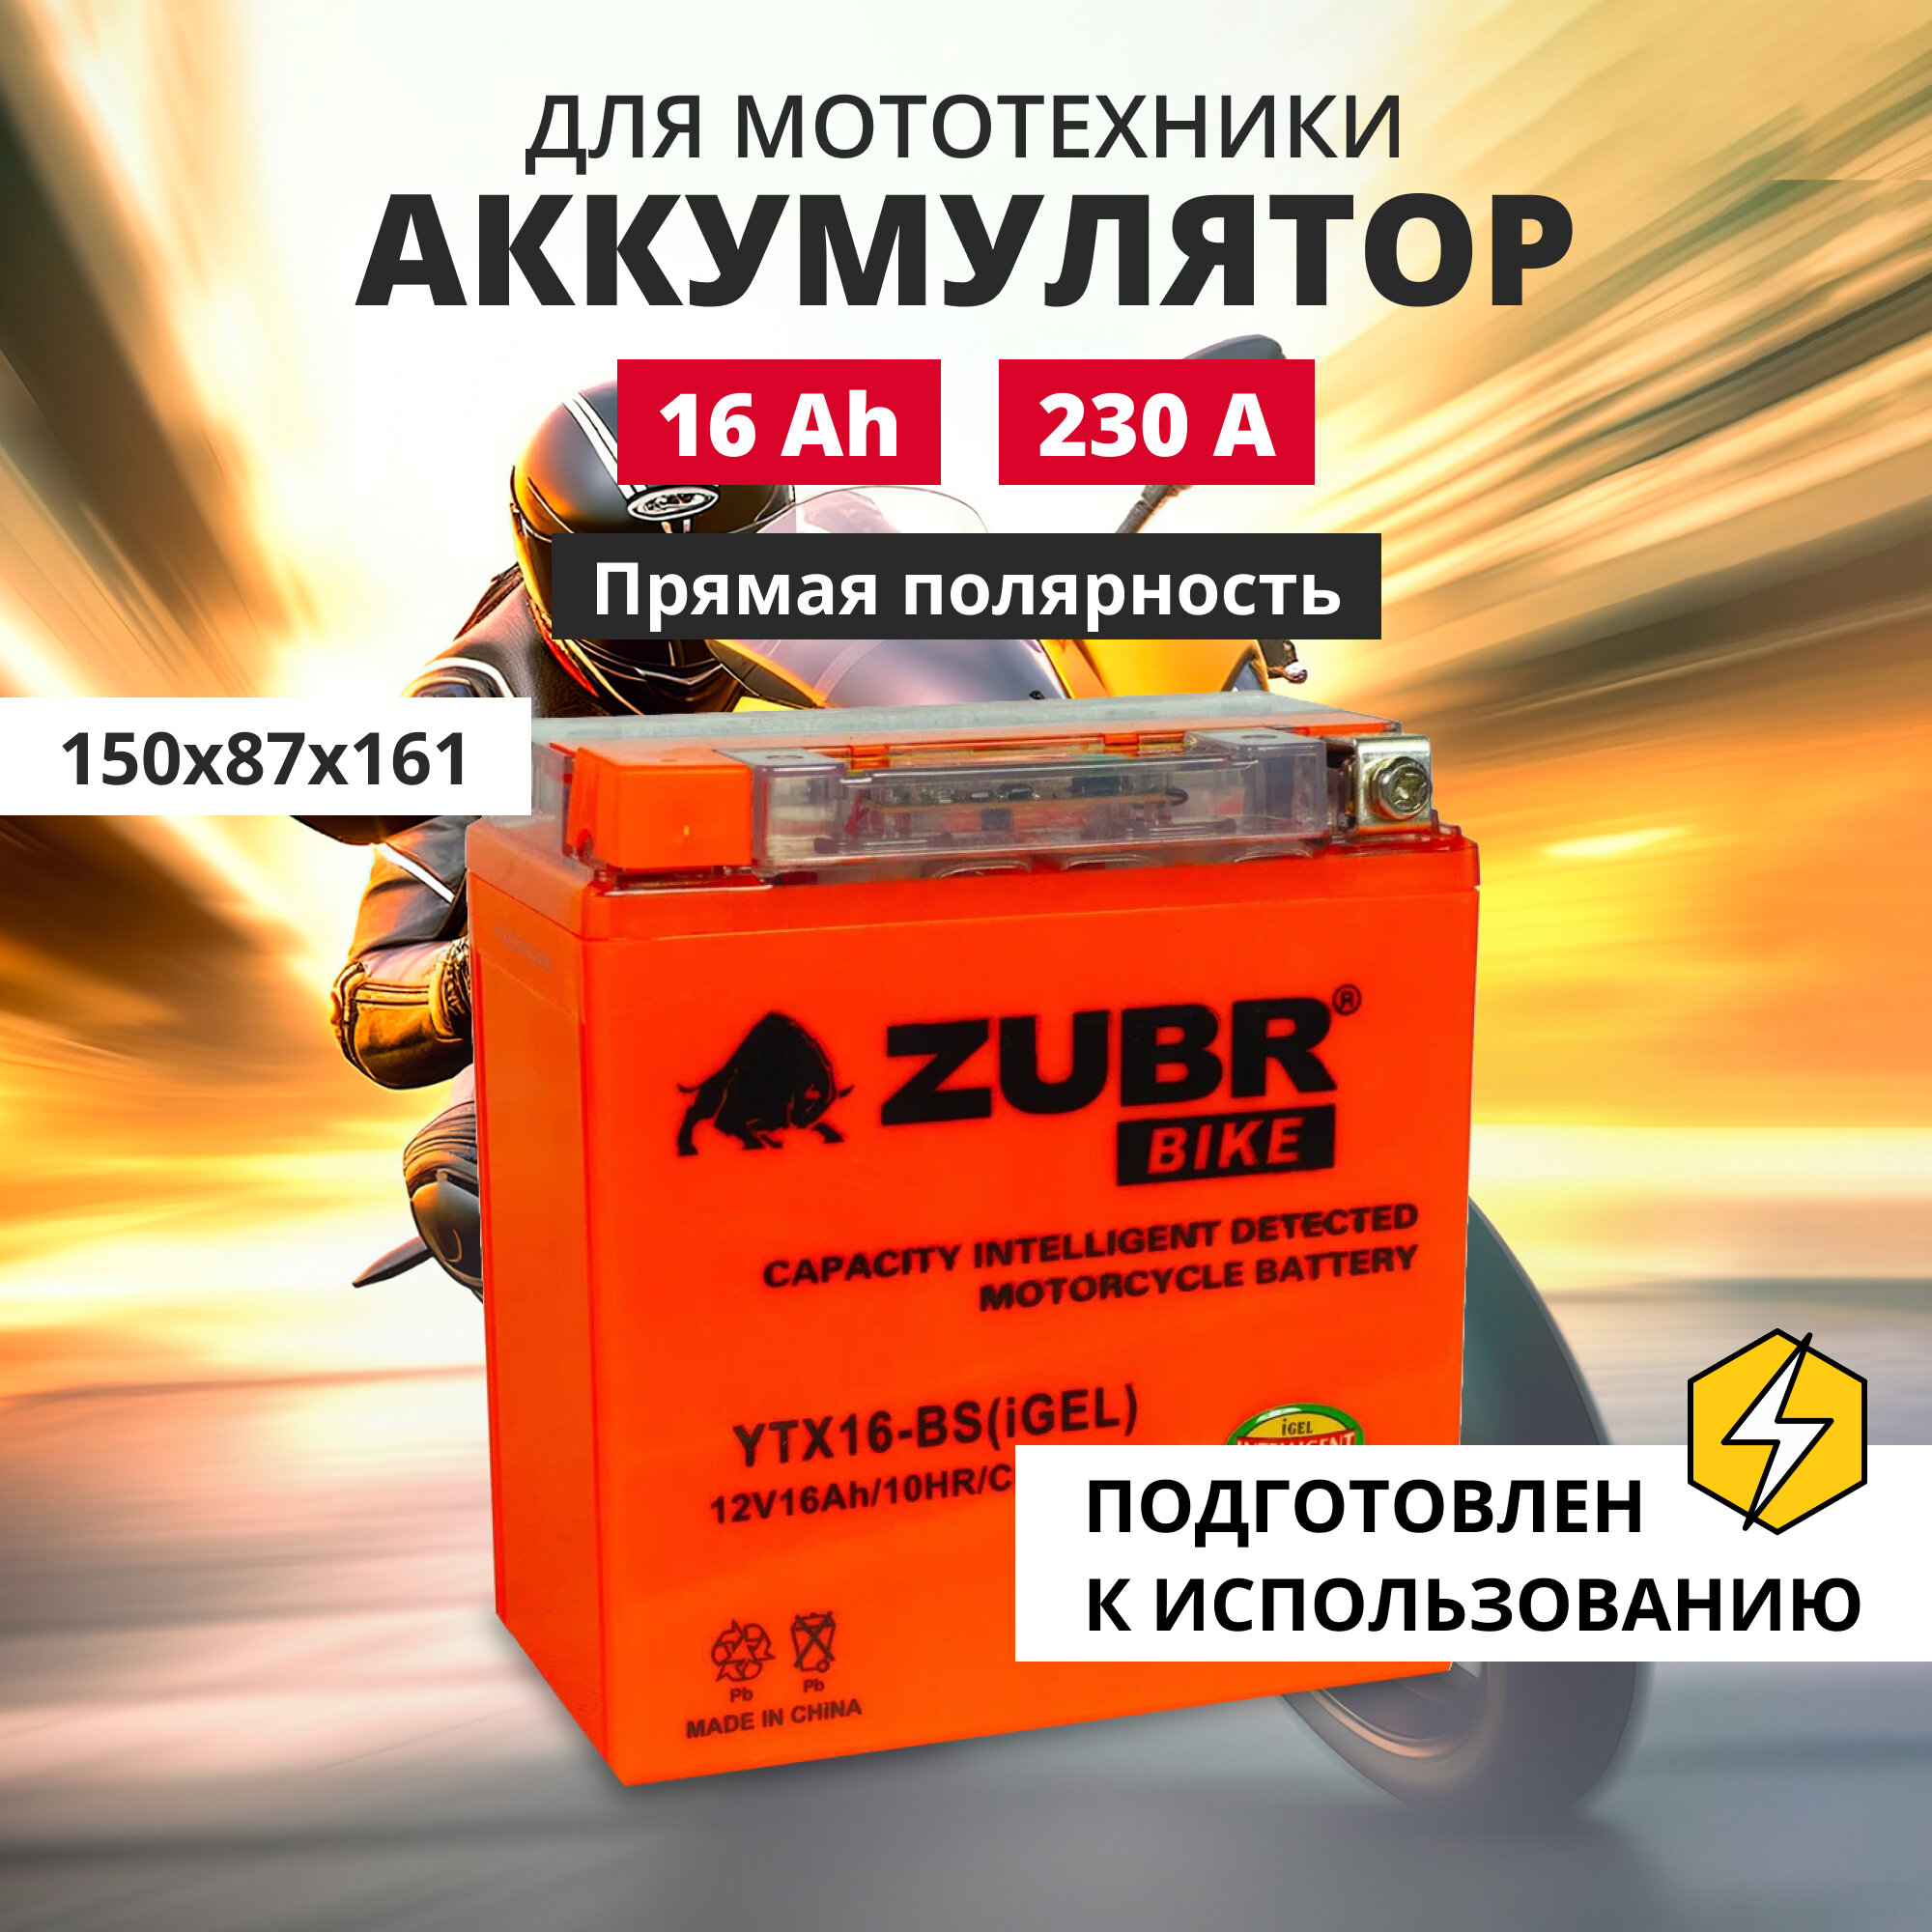 Аккумулятор для мотоцикла 12v ZUBR YTX16-BS(iGEL) прямая полярность 16 Ah 230 A гелевый, акб на скутер, мопед, квадроцикл 150x87x161 мм